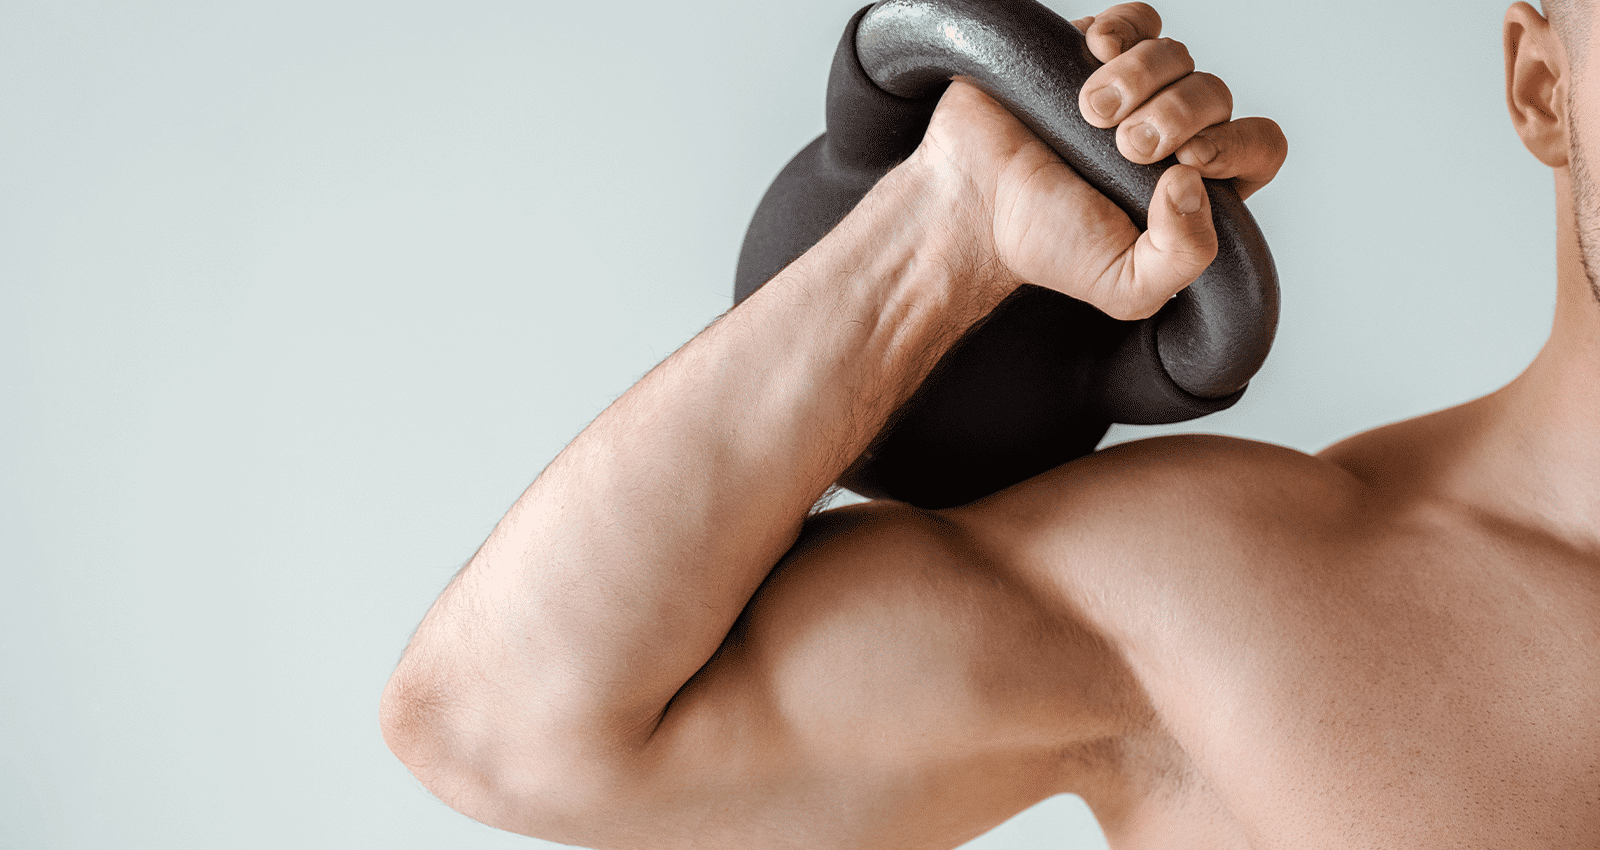 Drei Tipps zum Muskelaufbau